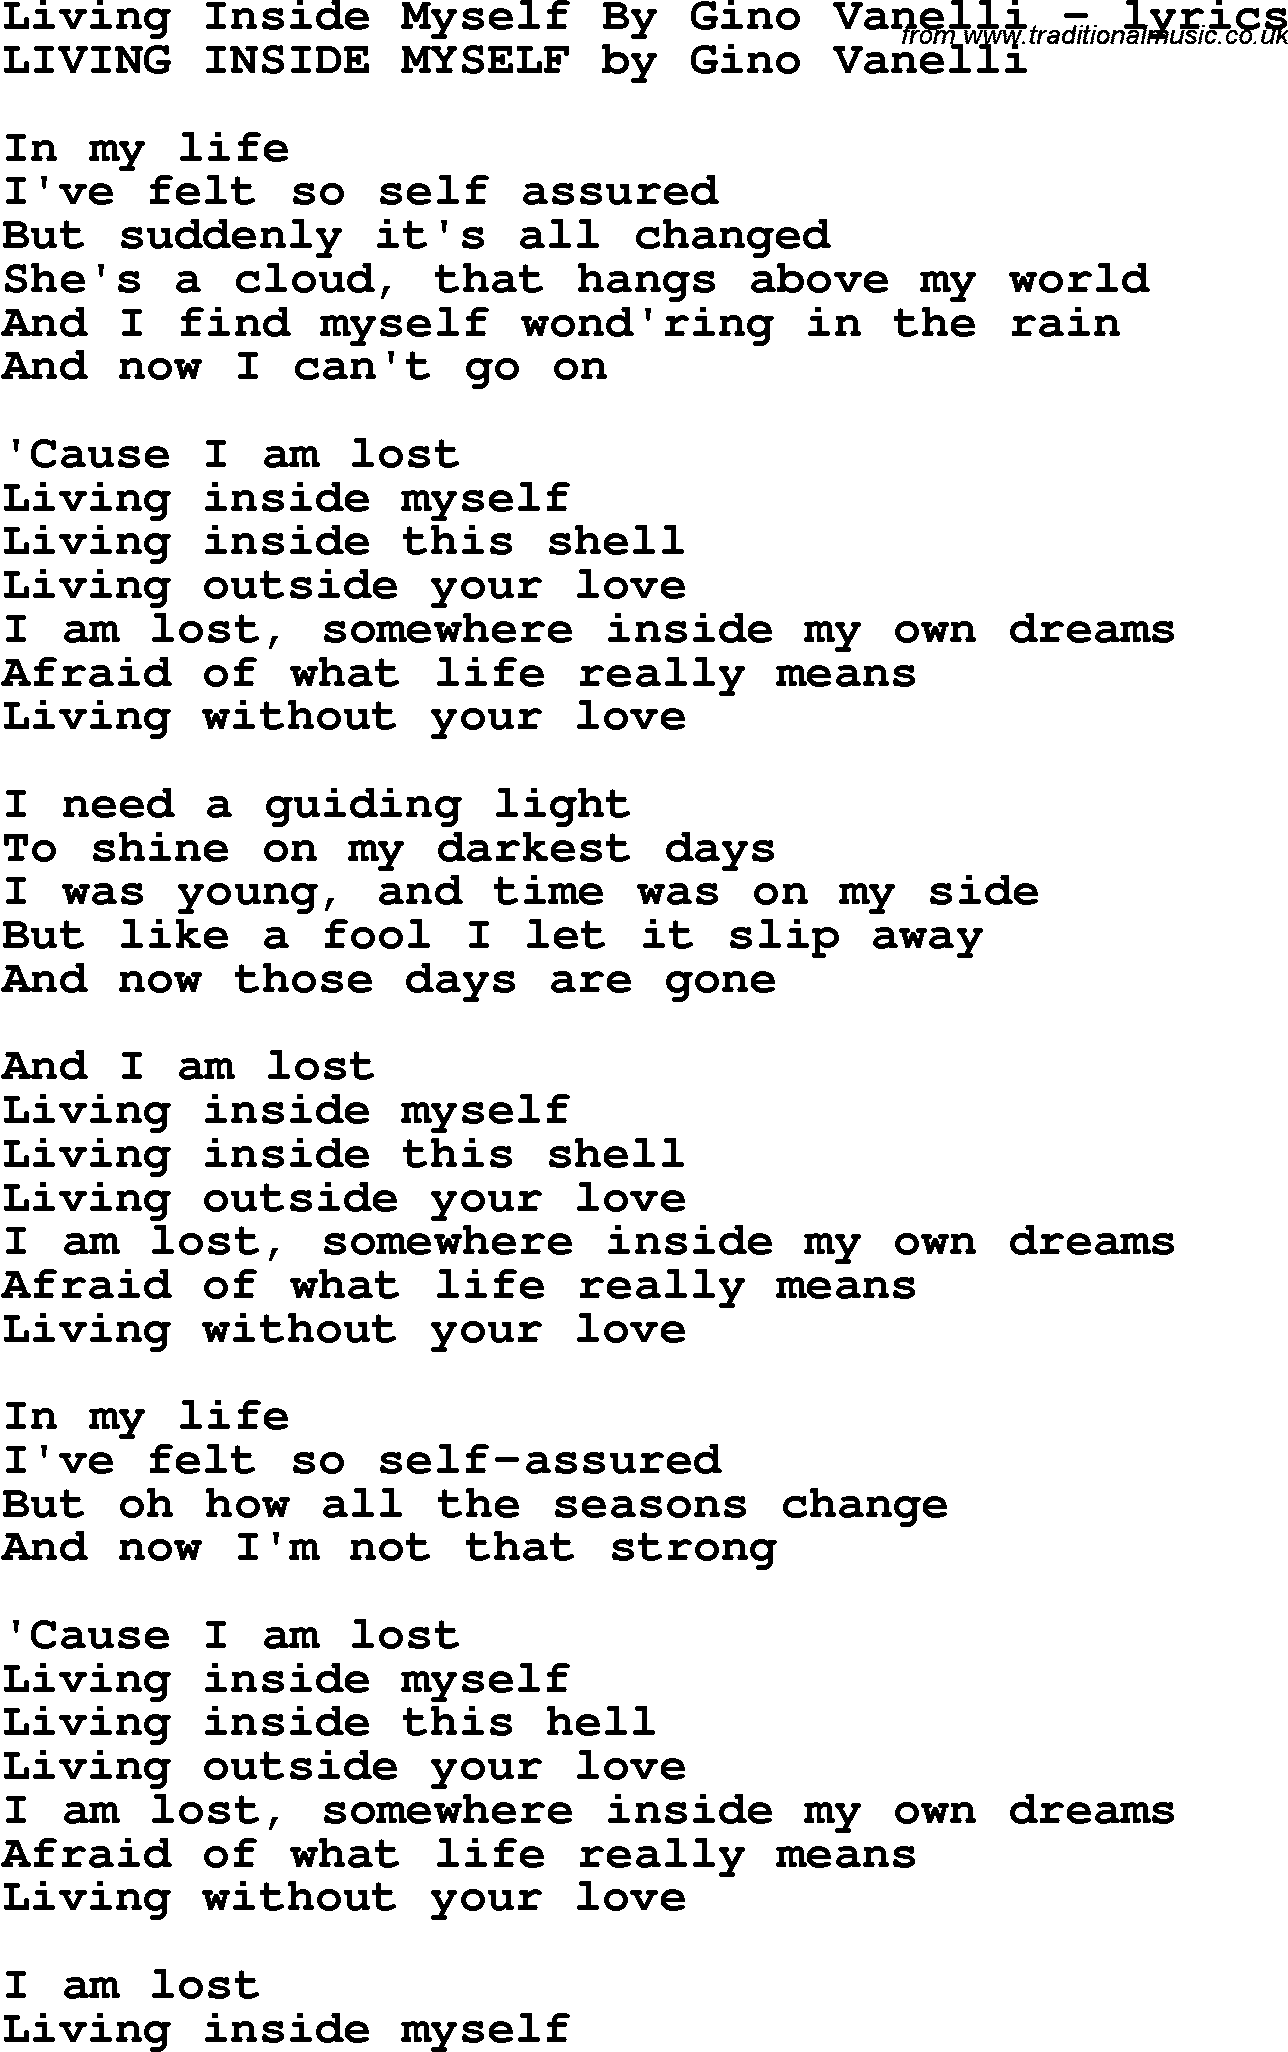 Love Song Lyrics for: Living Inside Myself By Gino Vanelli